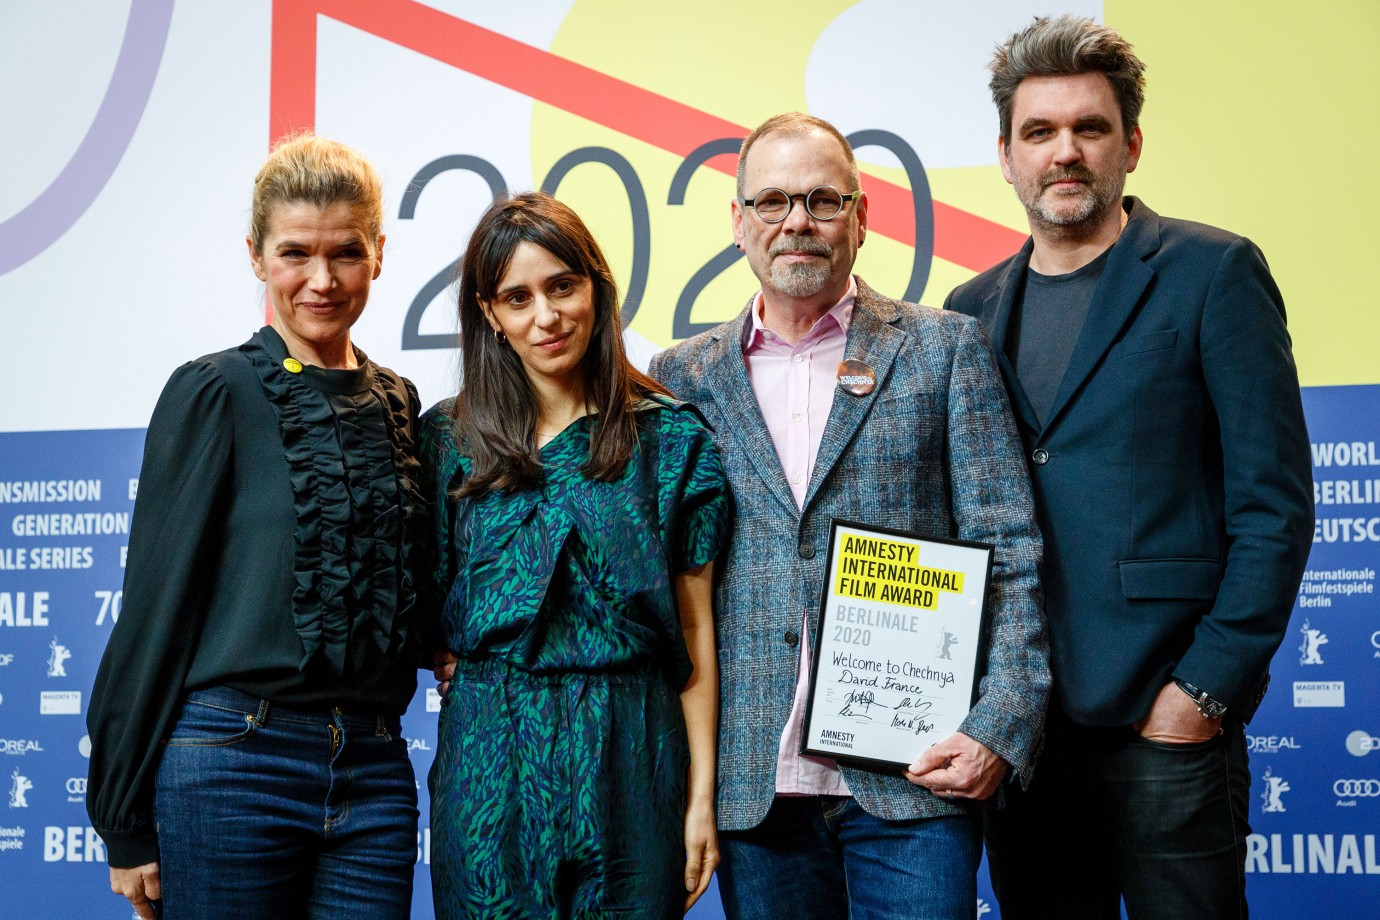 Teddy Award - The Queer Film Award at the Berlin International Film Festival